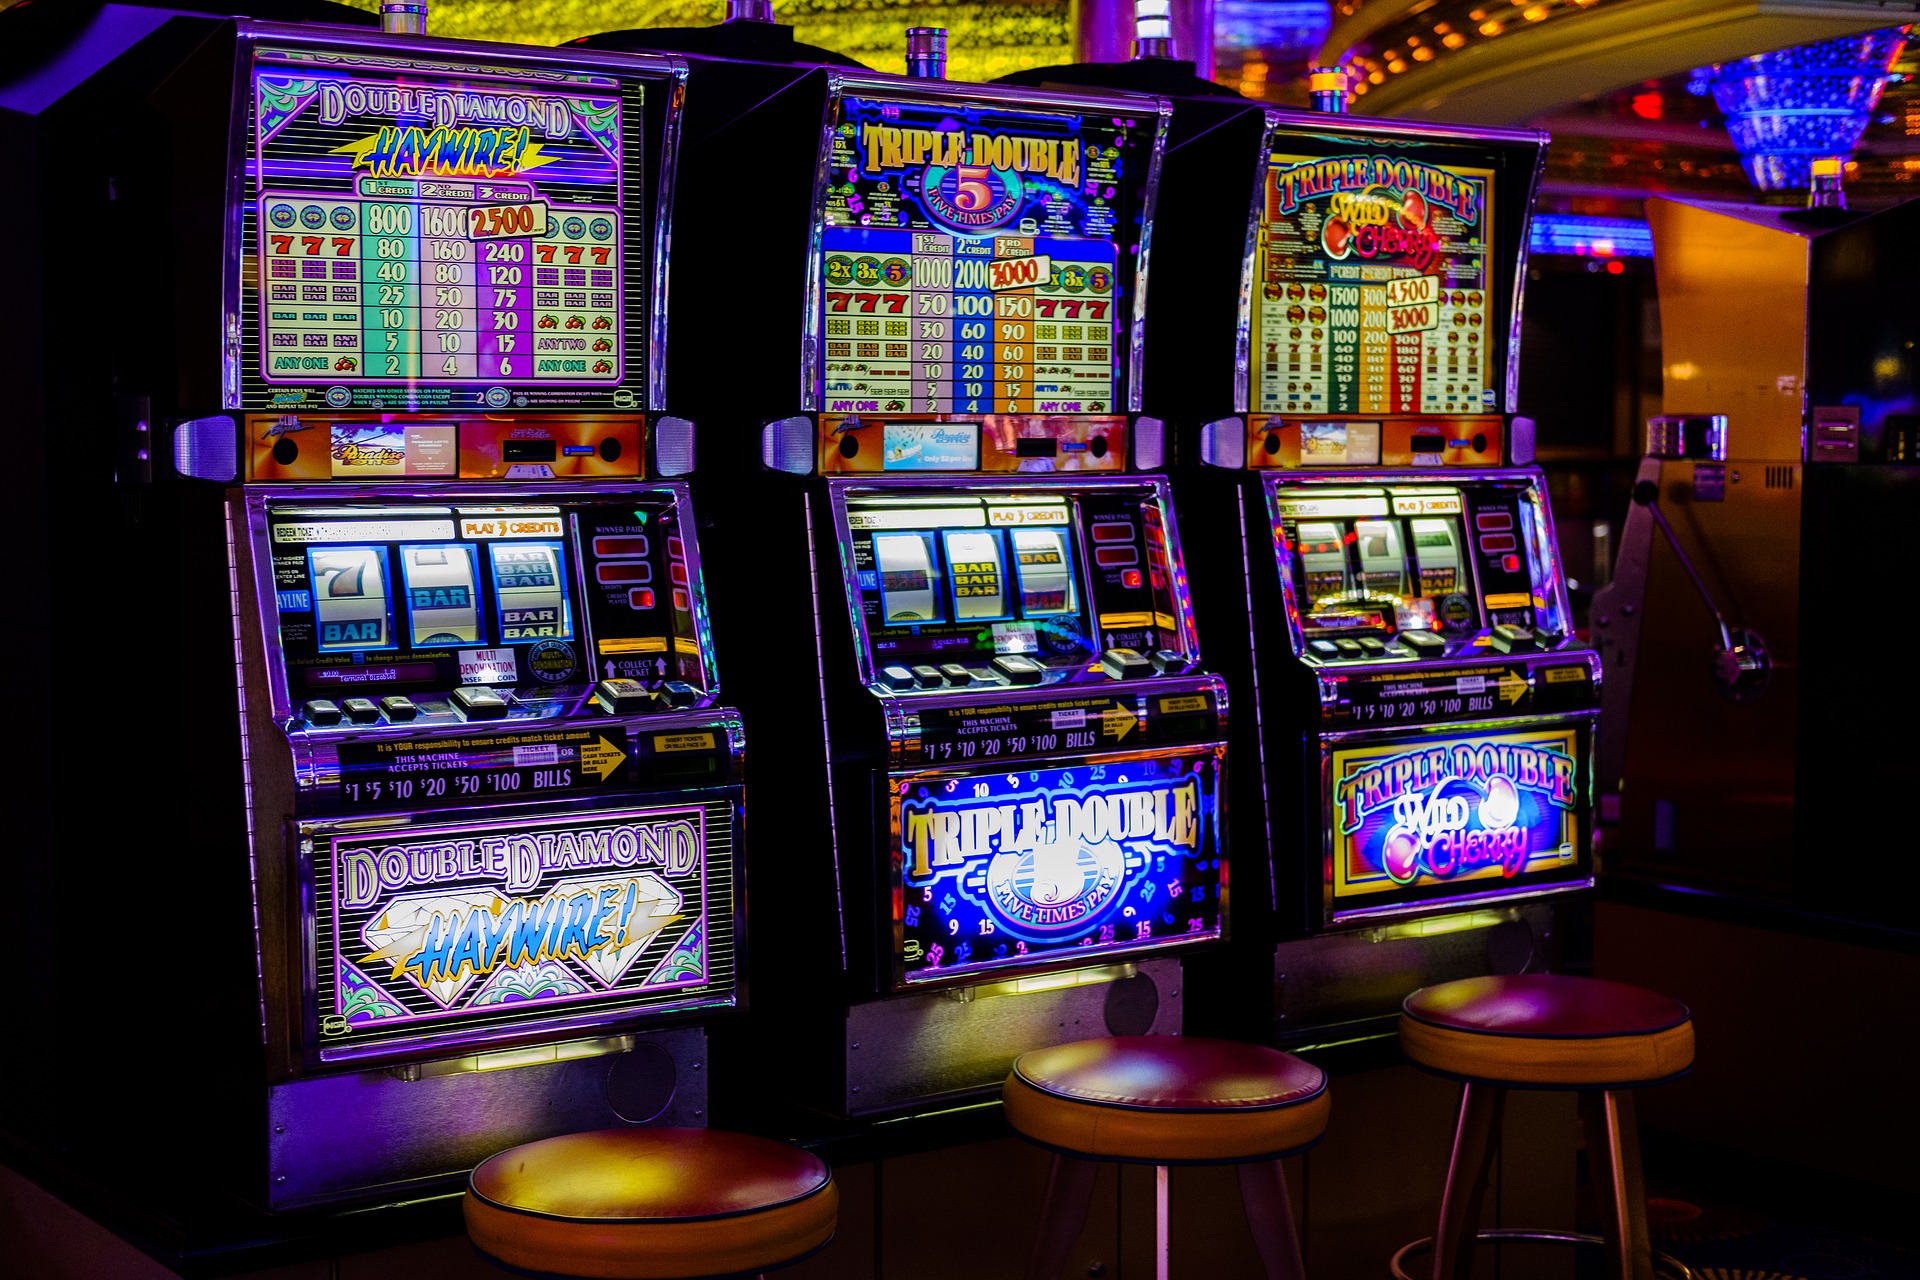 casino slots online free